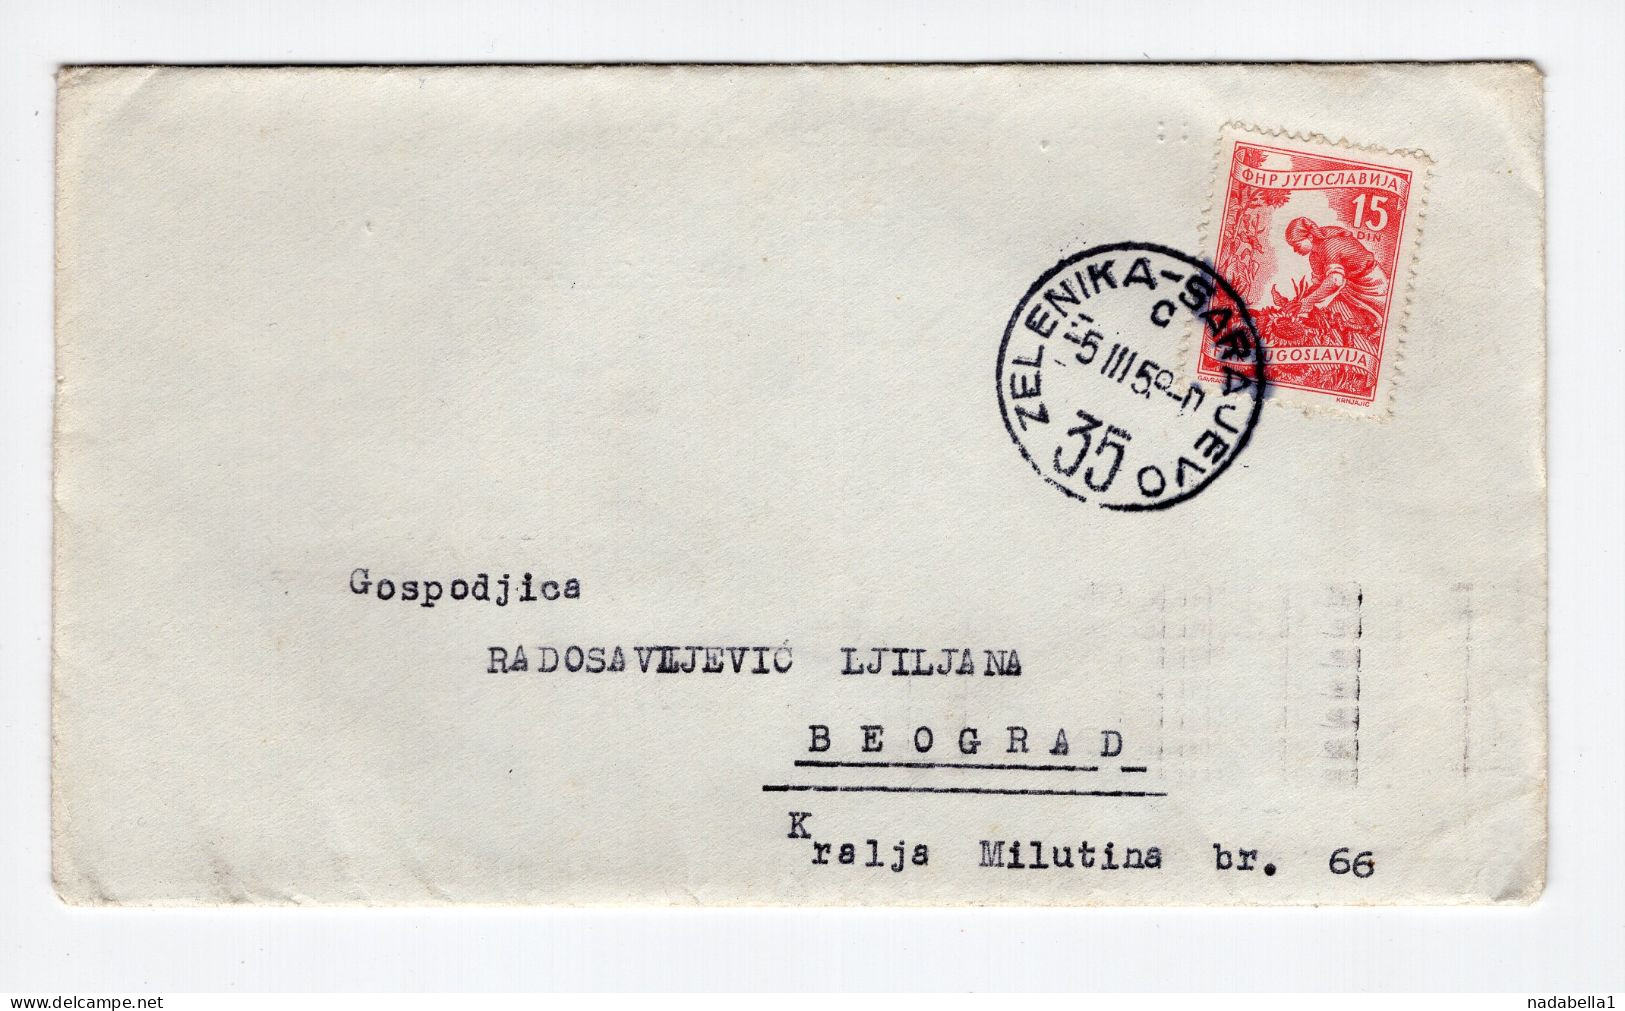 1959. YUGOSLAVIA,MONTENEGRO,HERCEG NOVI,TPO 35 ZELENIKA-SARAJEVO,COVER SENT TO BELGRADE - Covers & Documents